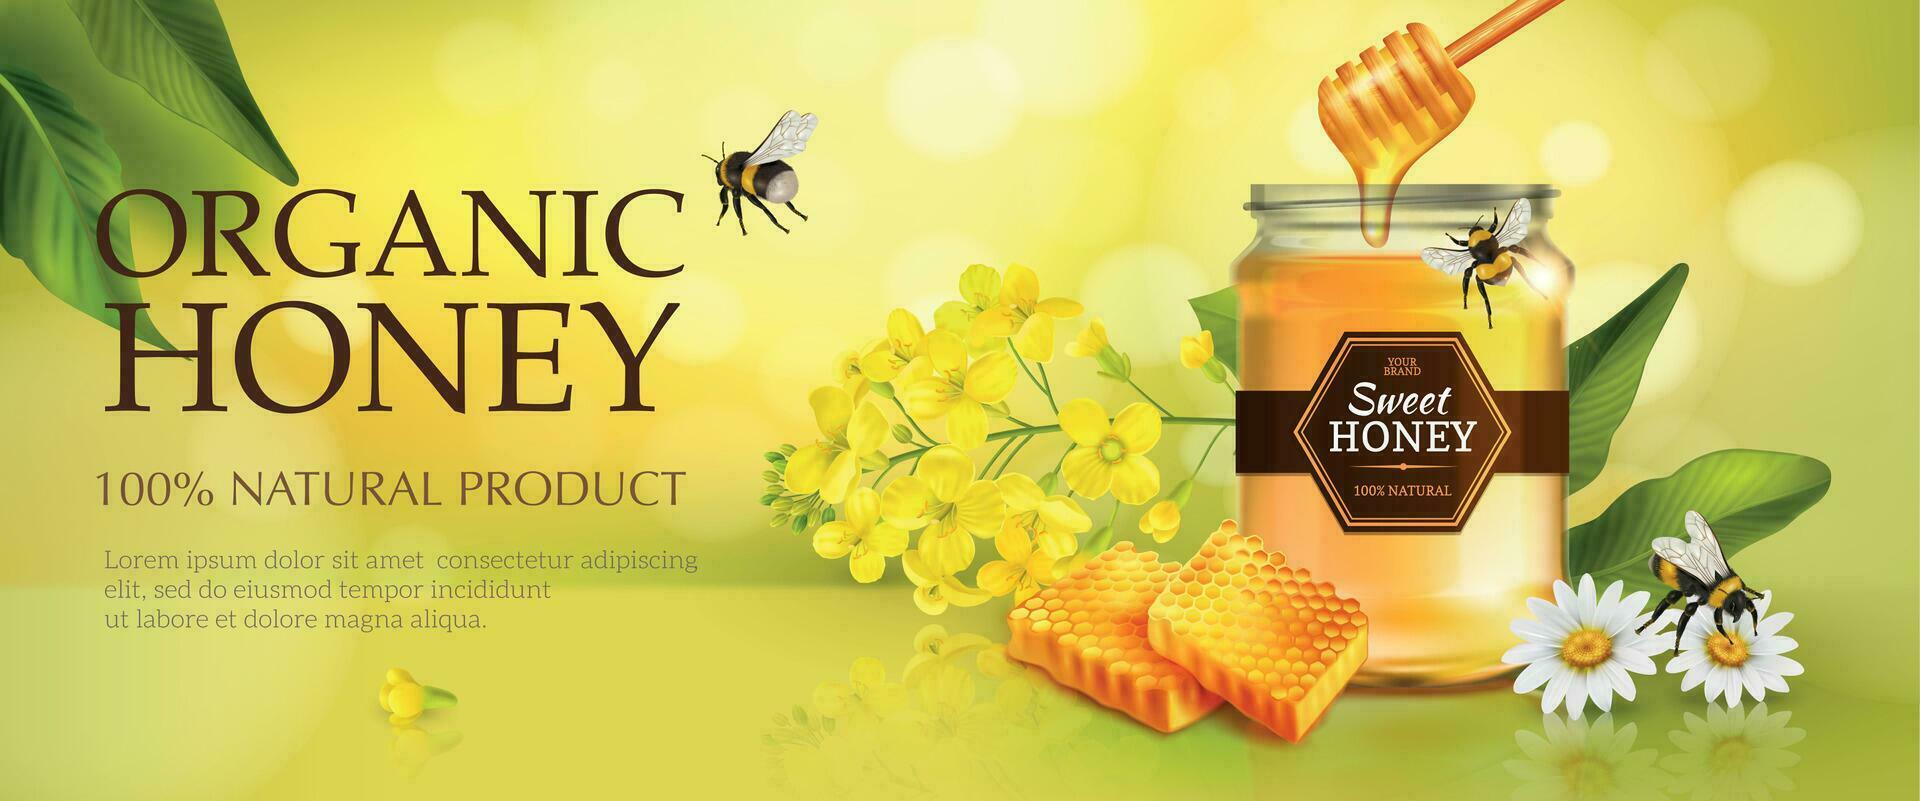 Organic Honey Horizontal Poster vector